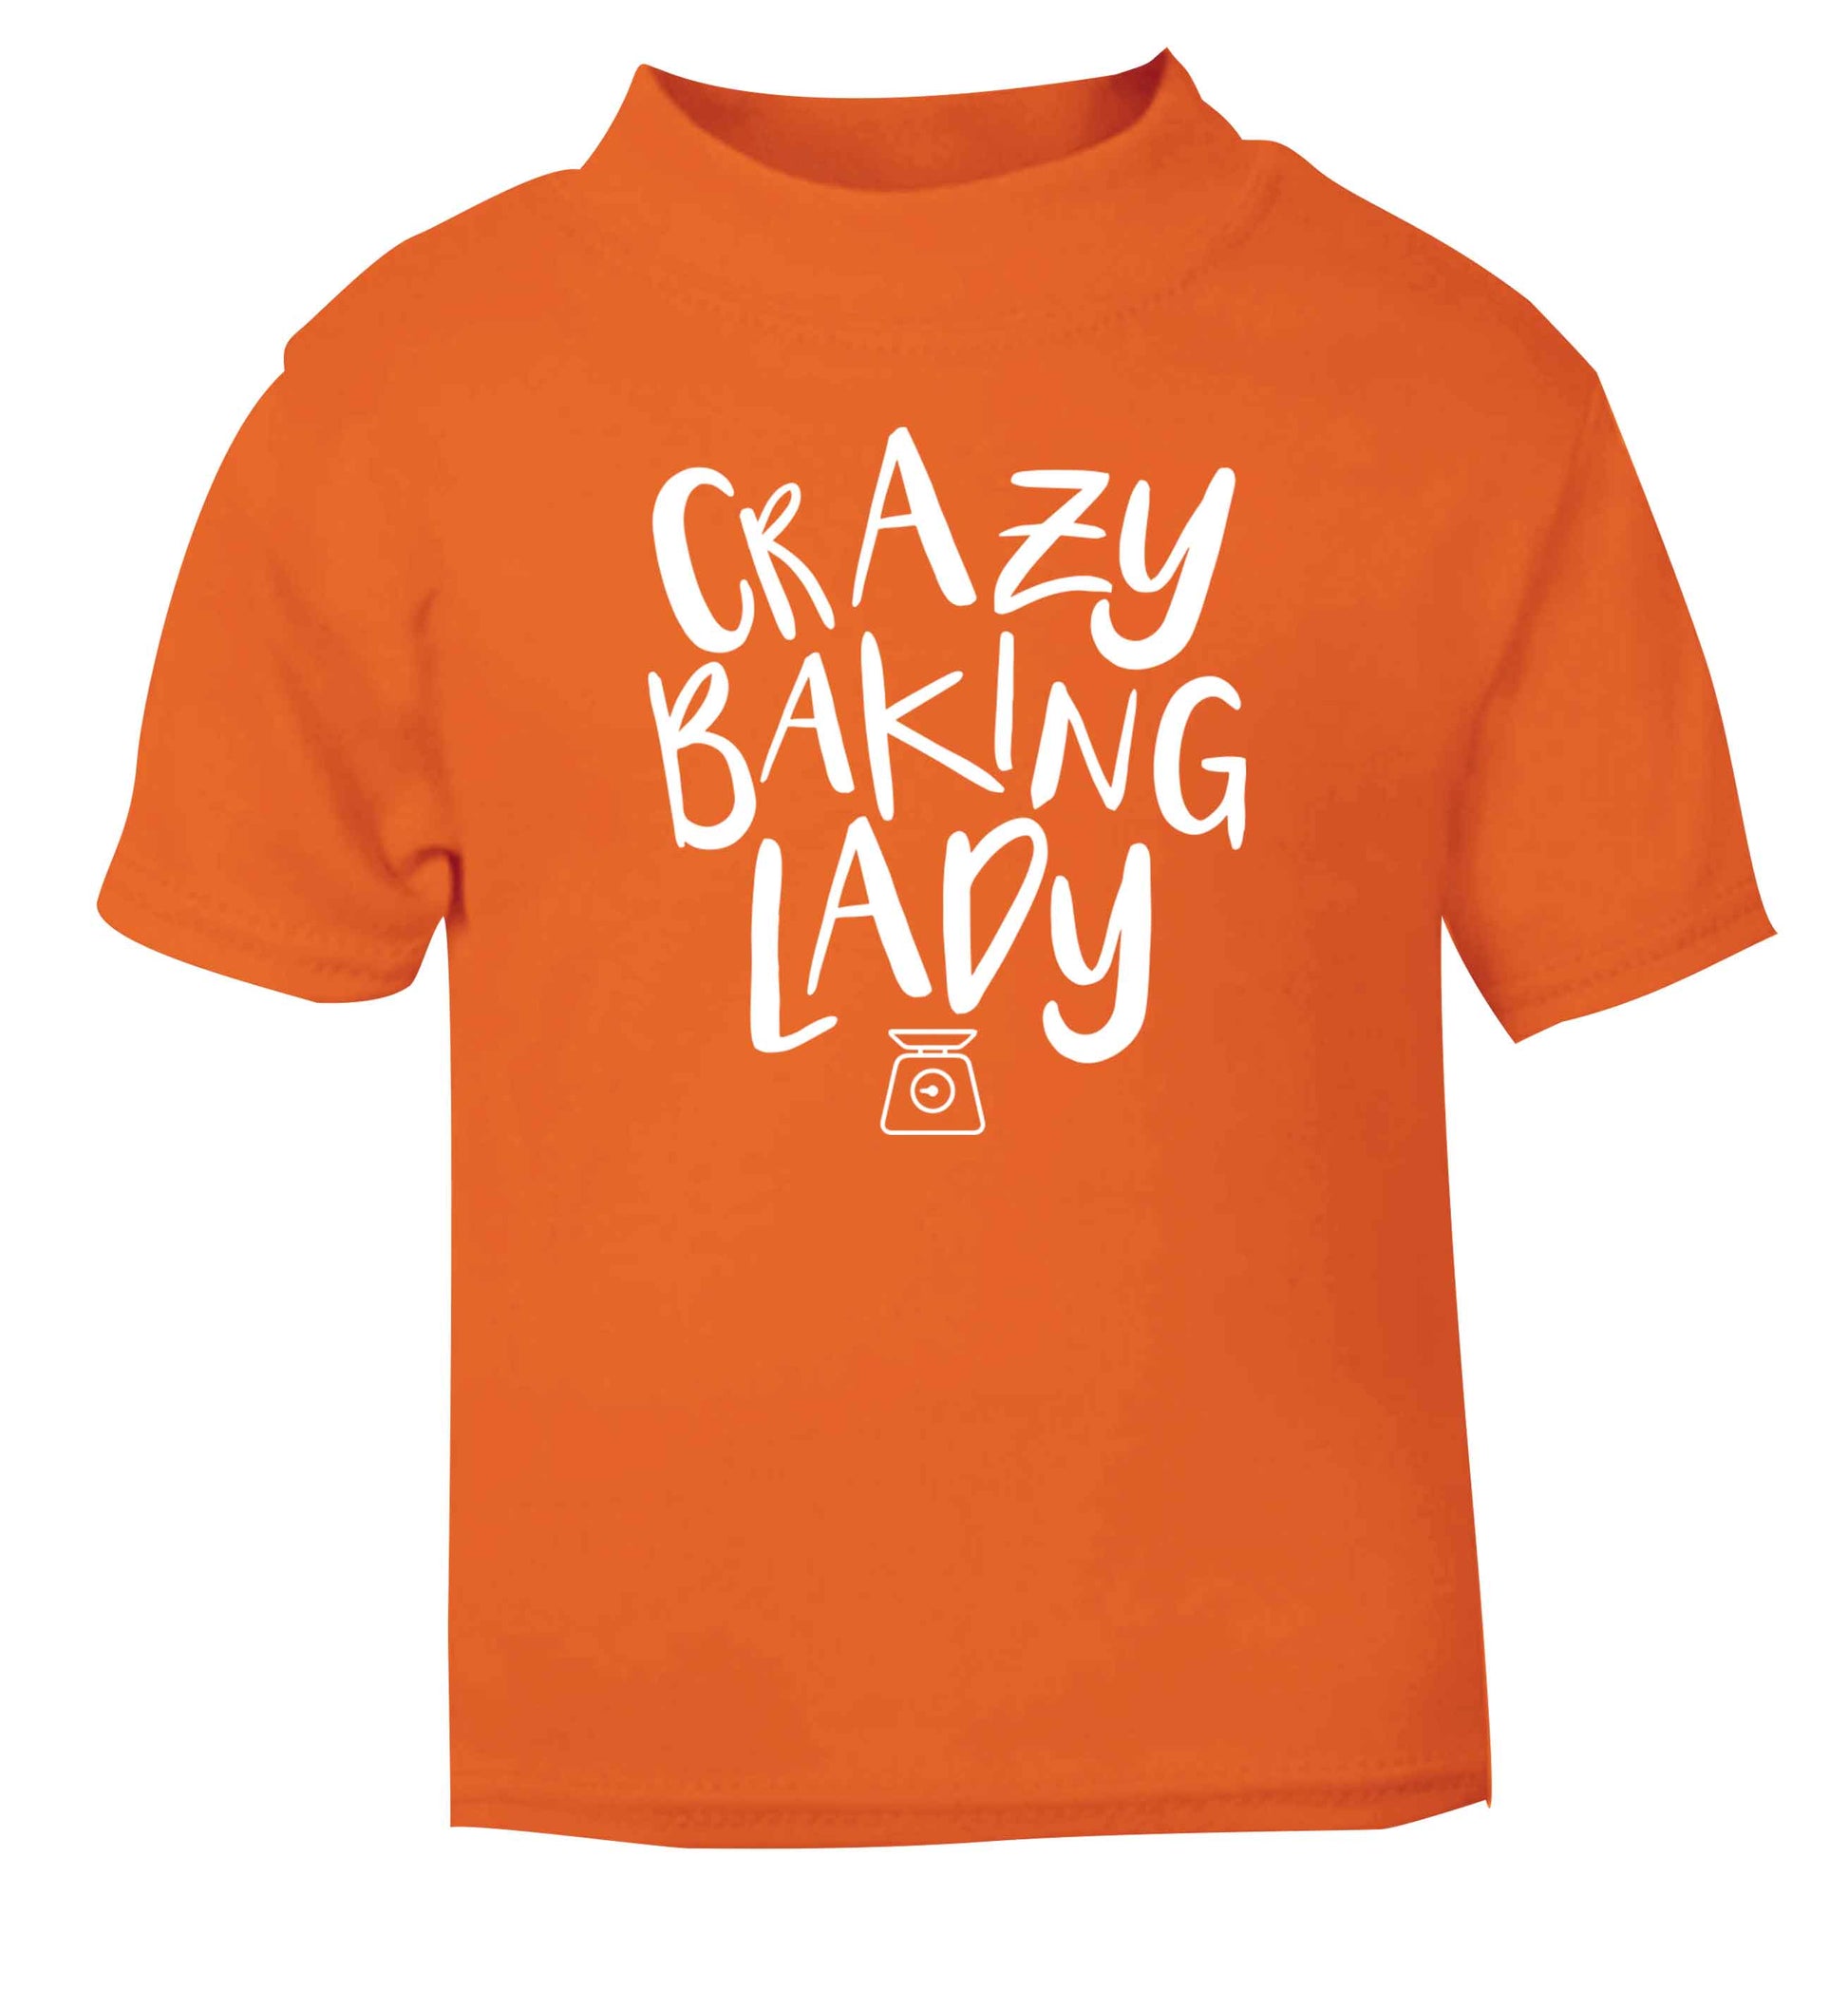 Crazy baking lady orange Baby Toddler Tshirt 2 Years